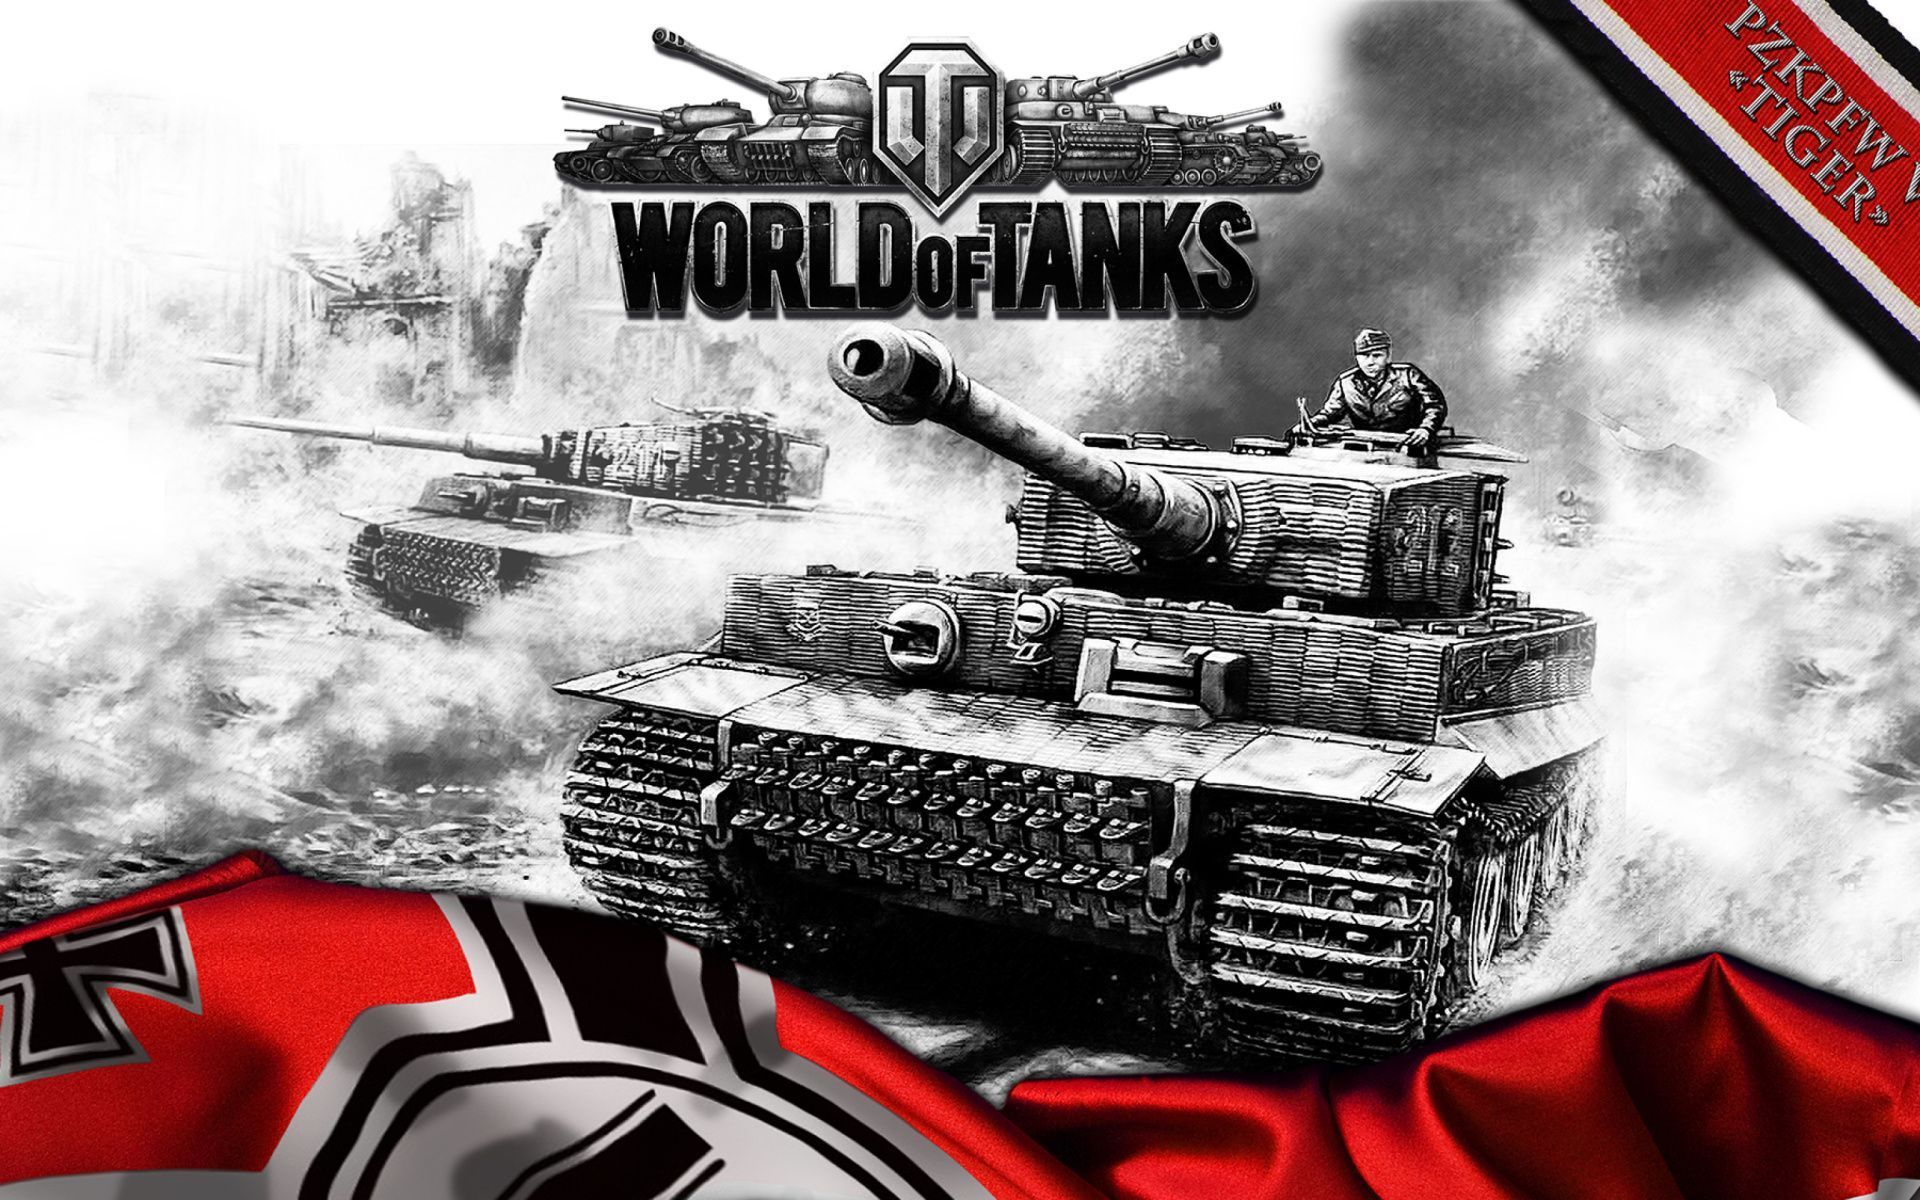 World-of-Tanks-with-Tiger-Tank-1920x1200.jpg